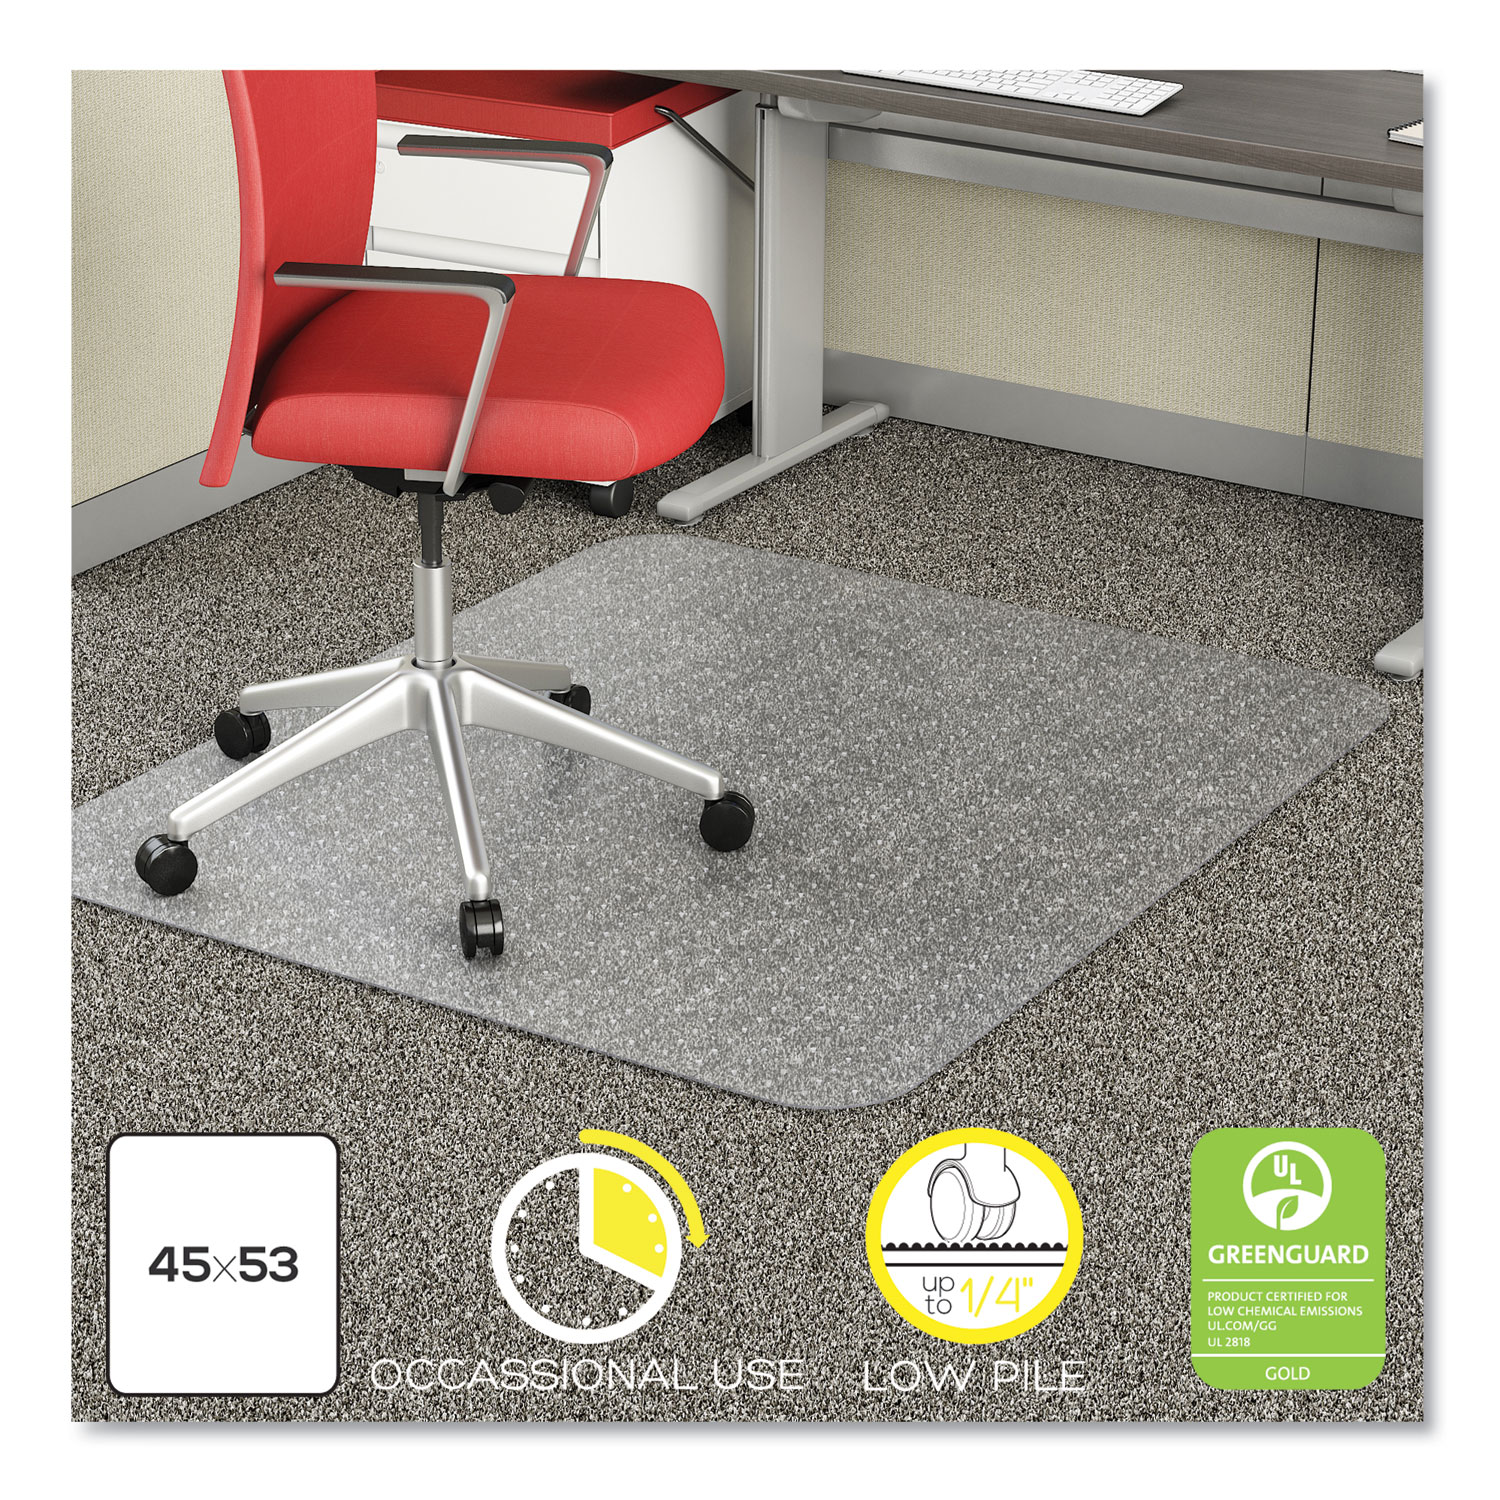  deflecto CM11242COM EconoMat Occasional Use Chair Mat for Low Pile Carpet, 45 x 53, Rectangular, Clear (DEFCM11242COM) 